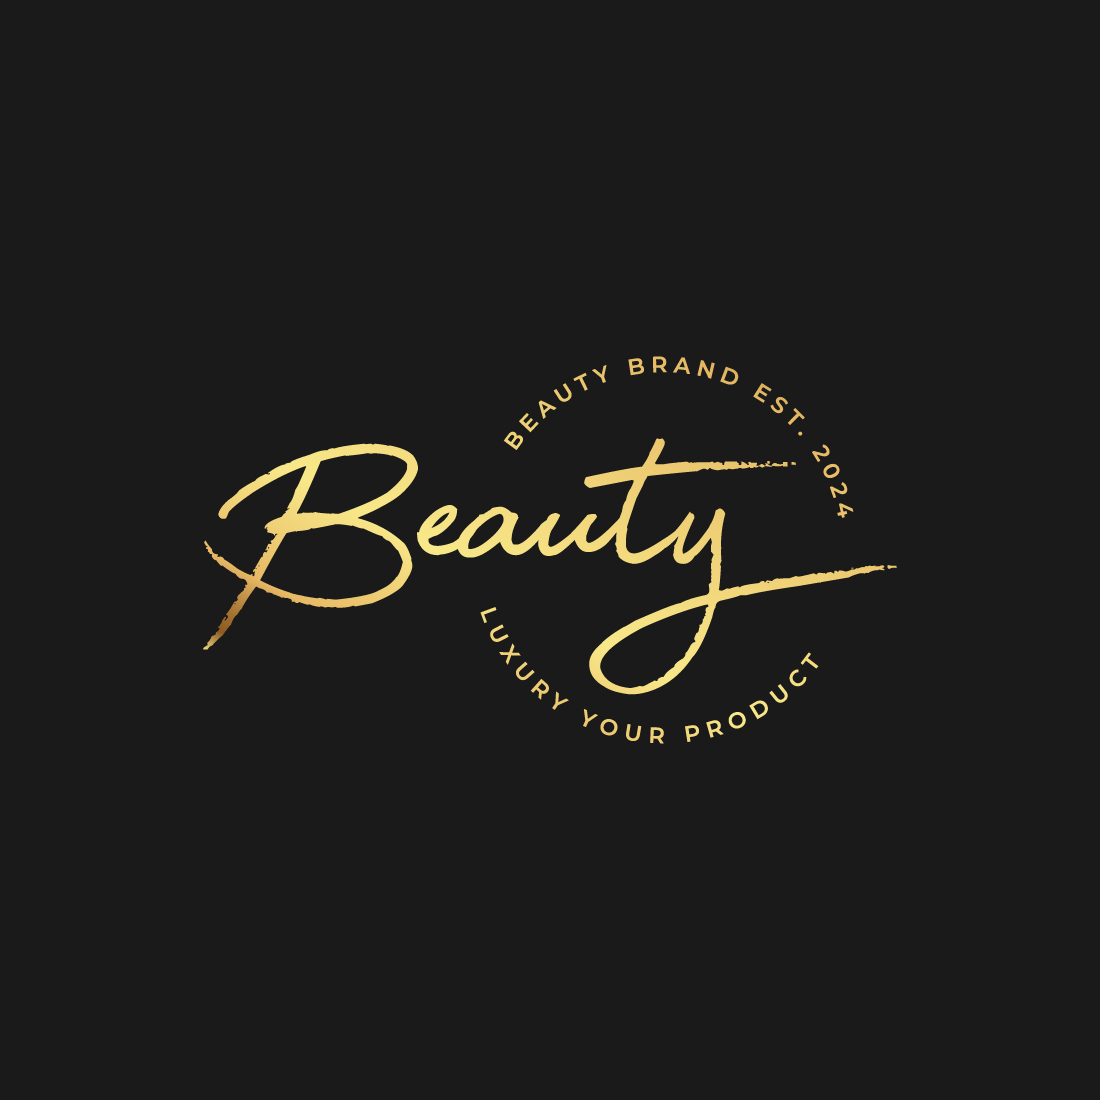 Beauty Luxury Typography logo design cover image.